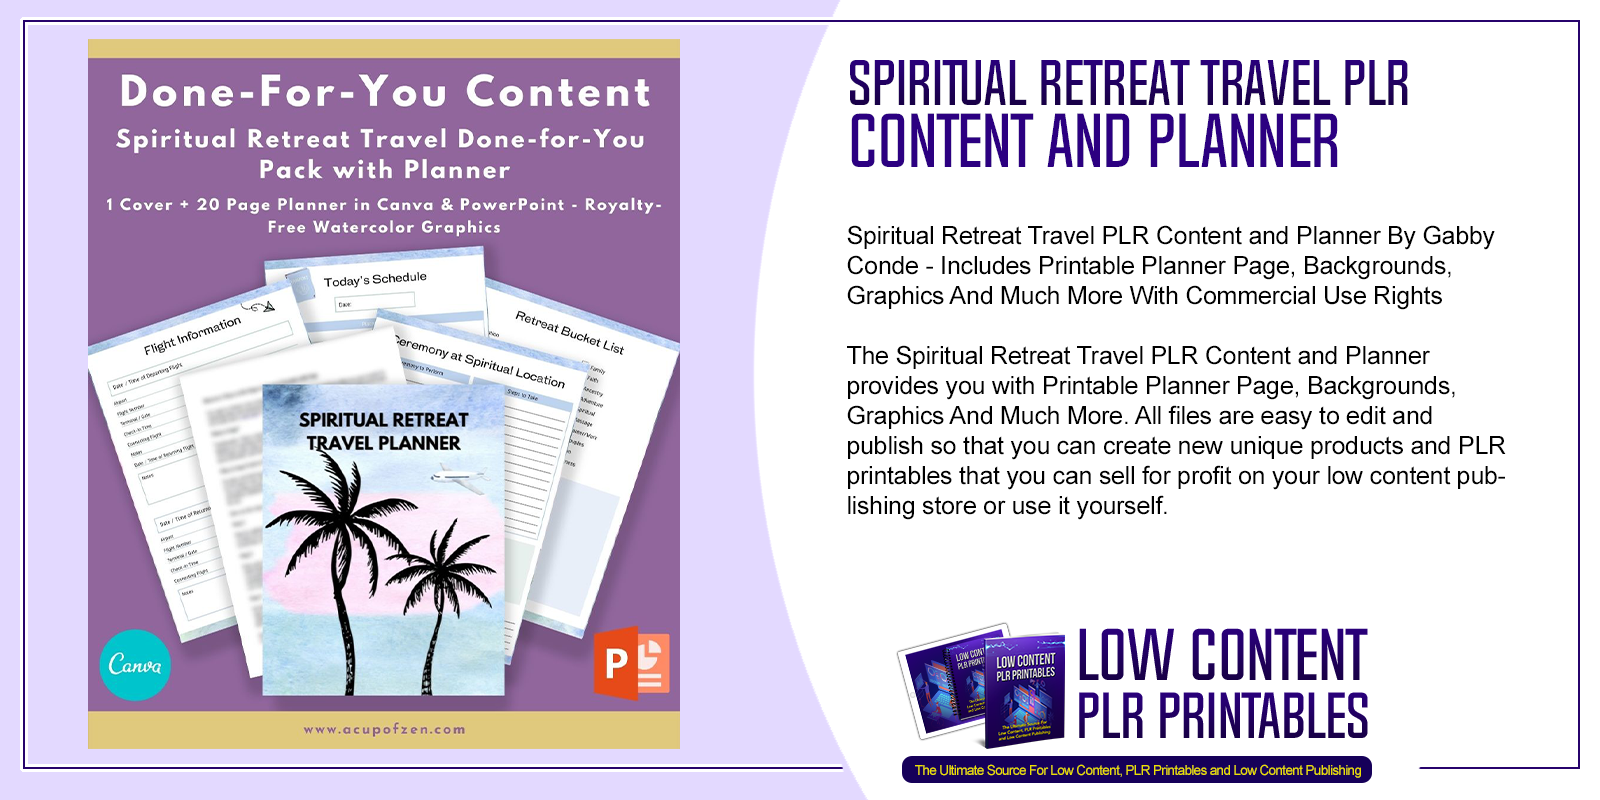 Spiritual Retreat Travel PLR Content and Planner